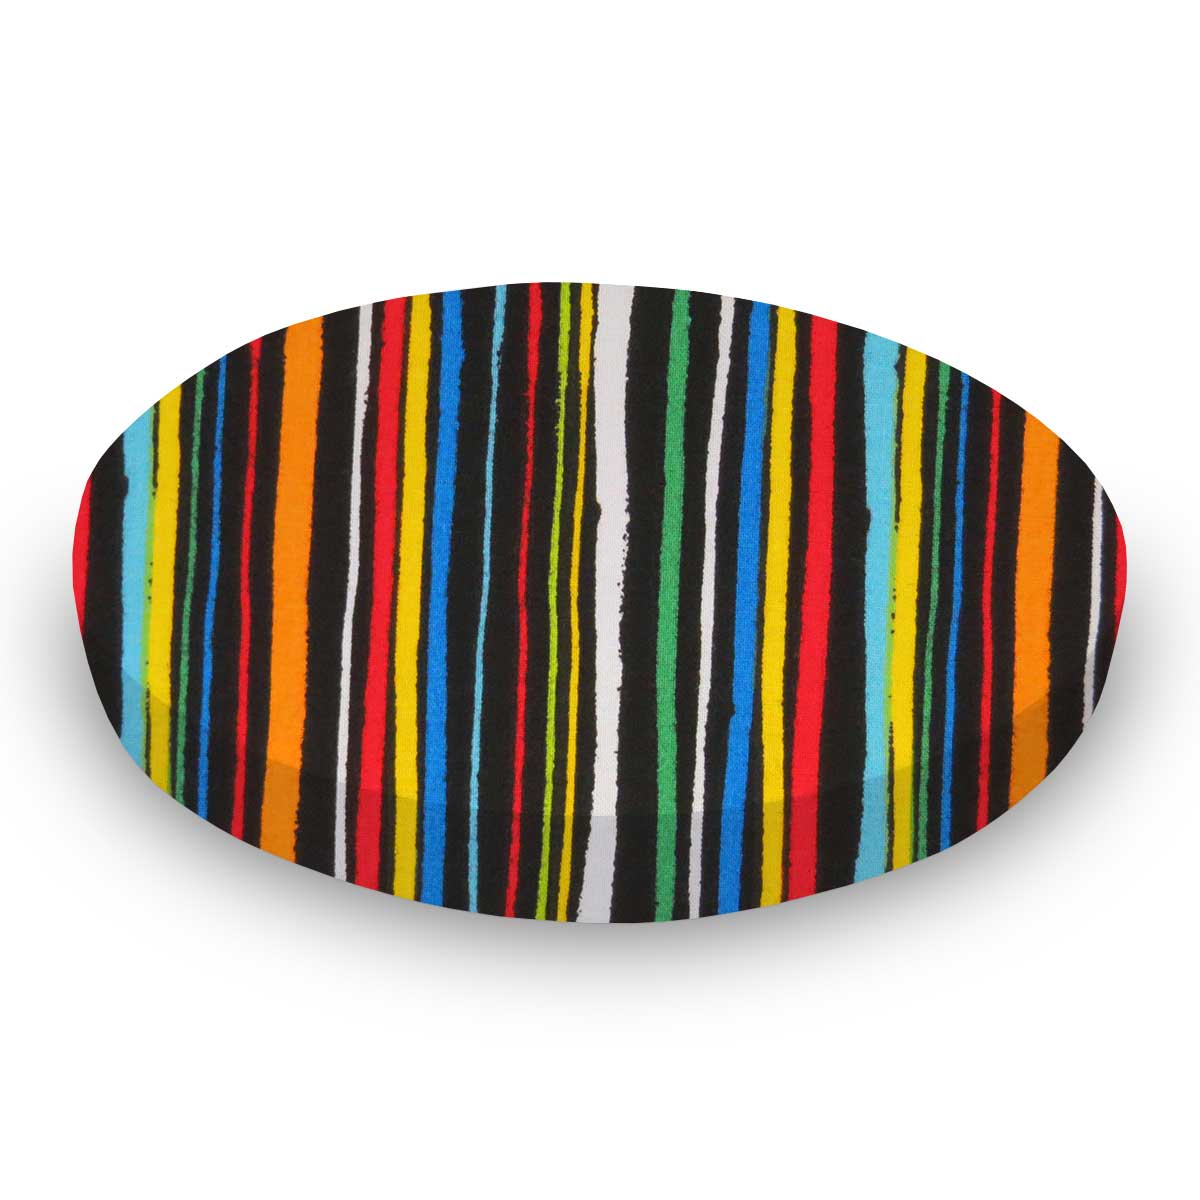 Oval Crib (Stokke Sleepi) - Colored Stripes Black - Fitted  Oval